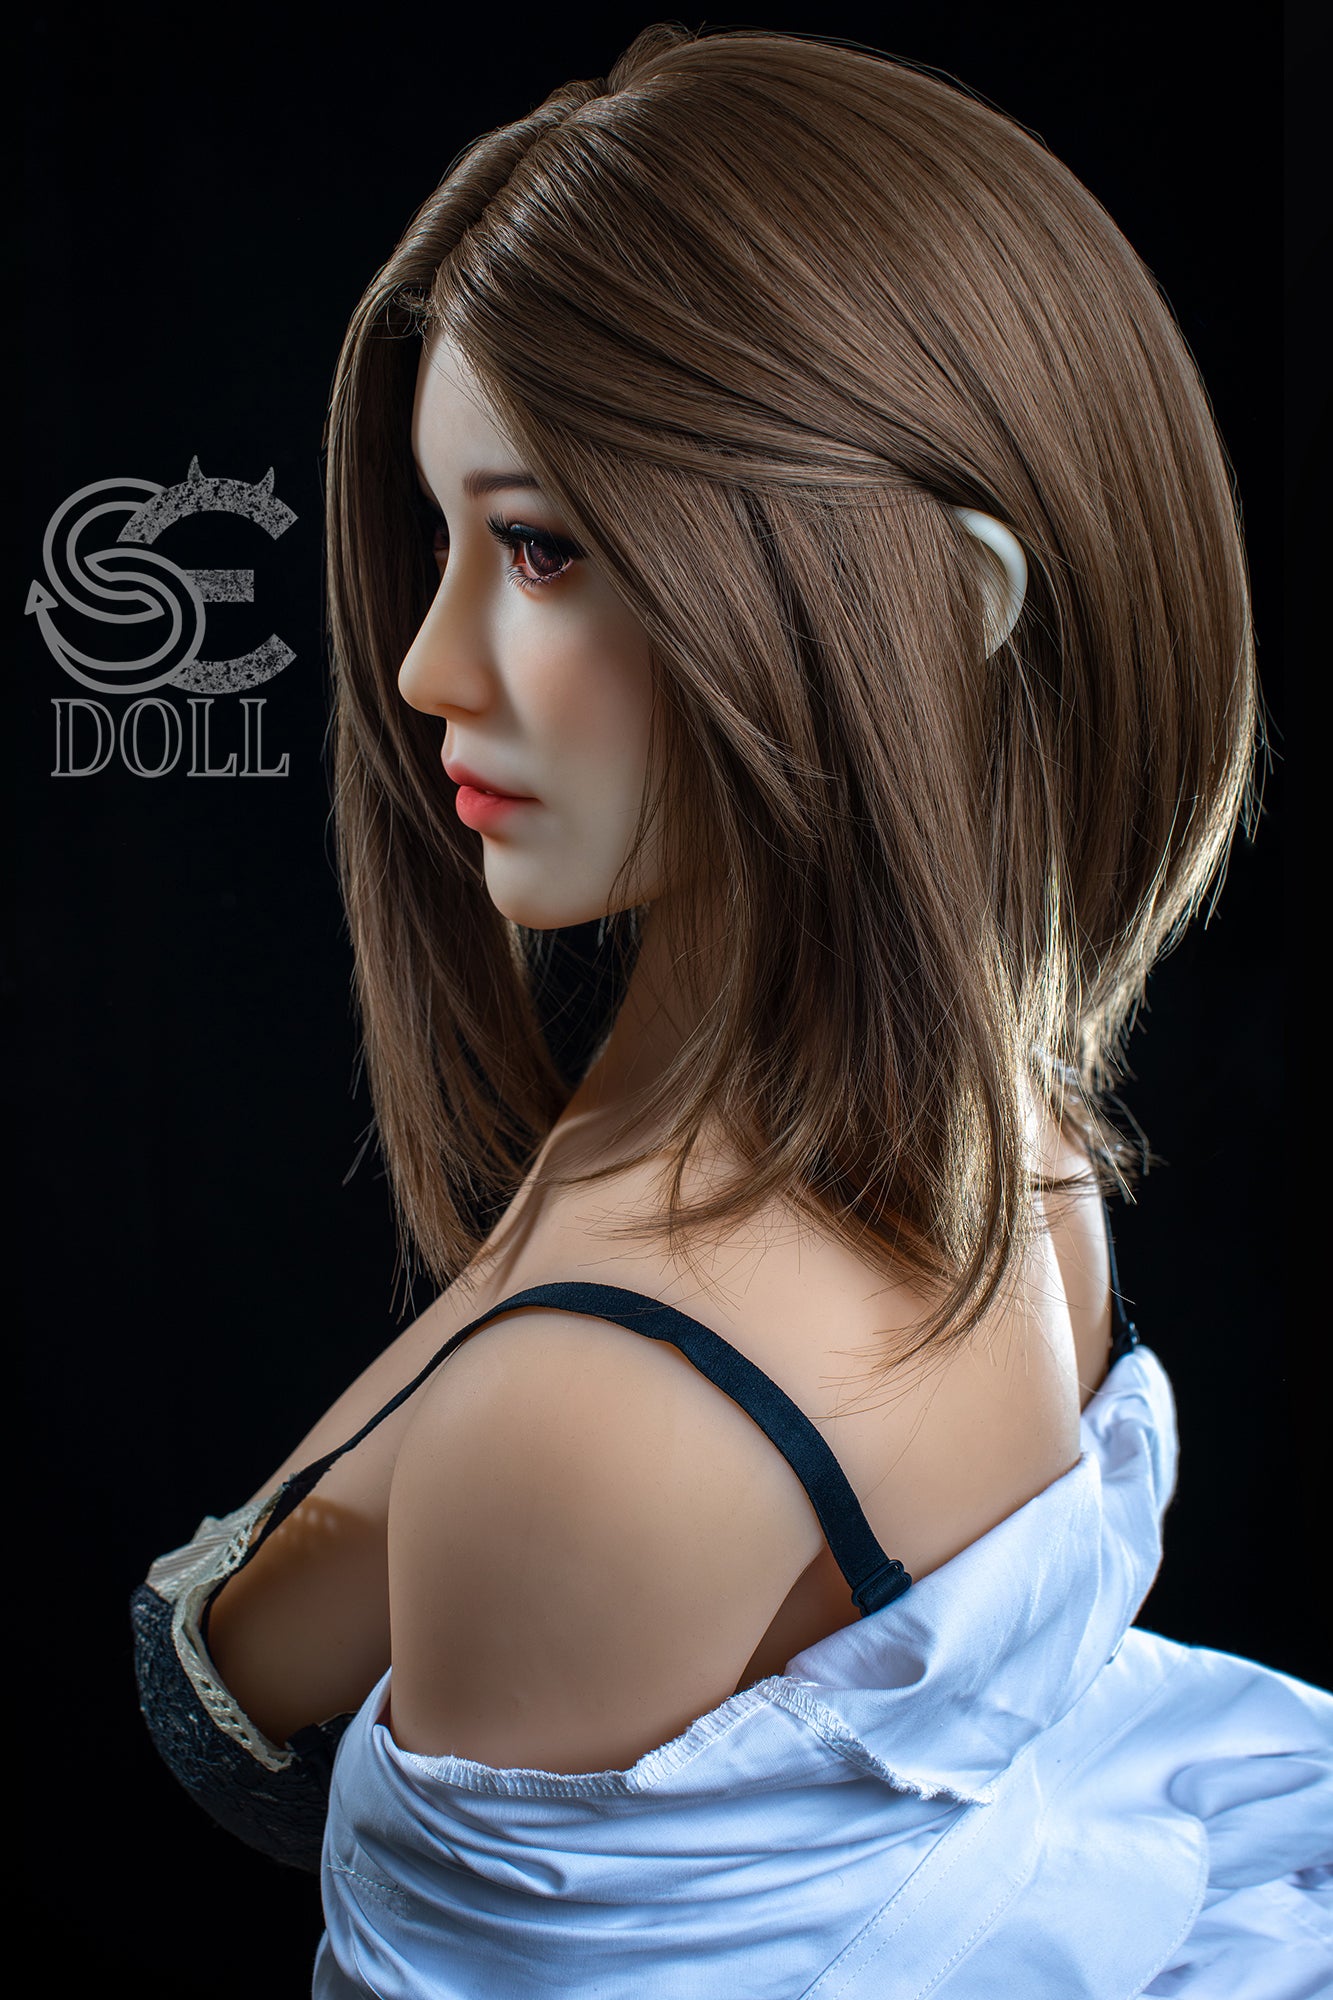 SEDOLL 163 cm E TPE - Lorraine | Buy Sex Dolls at DOLLS ACTUALLY